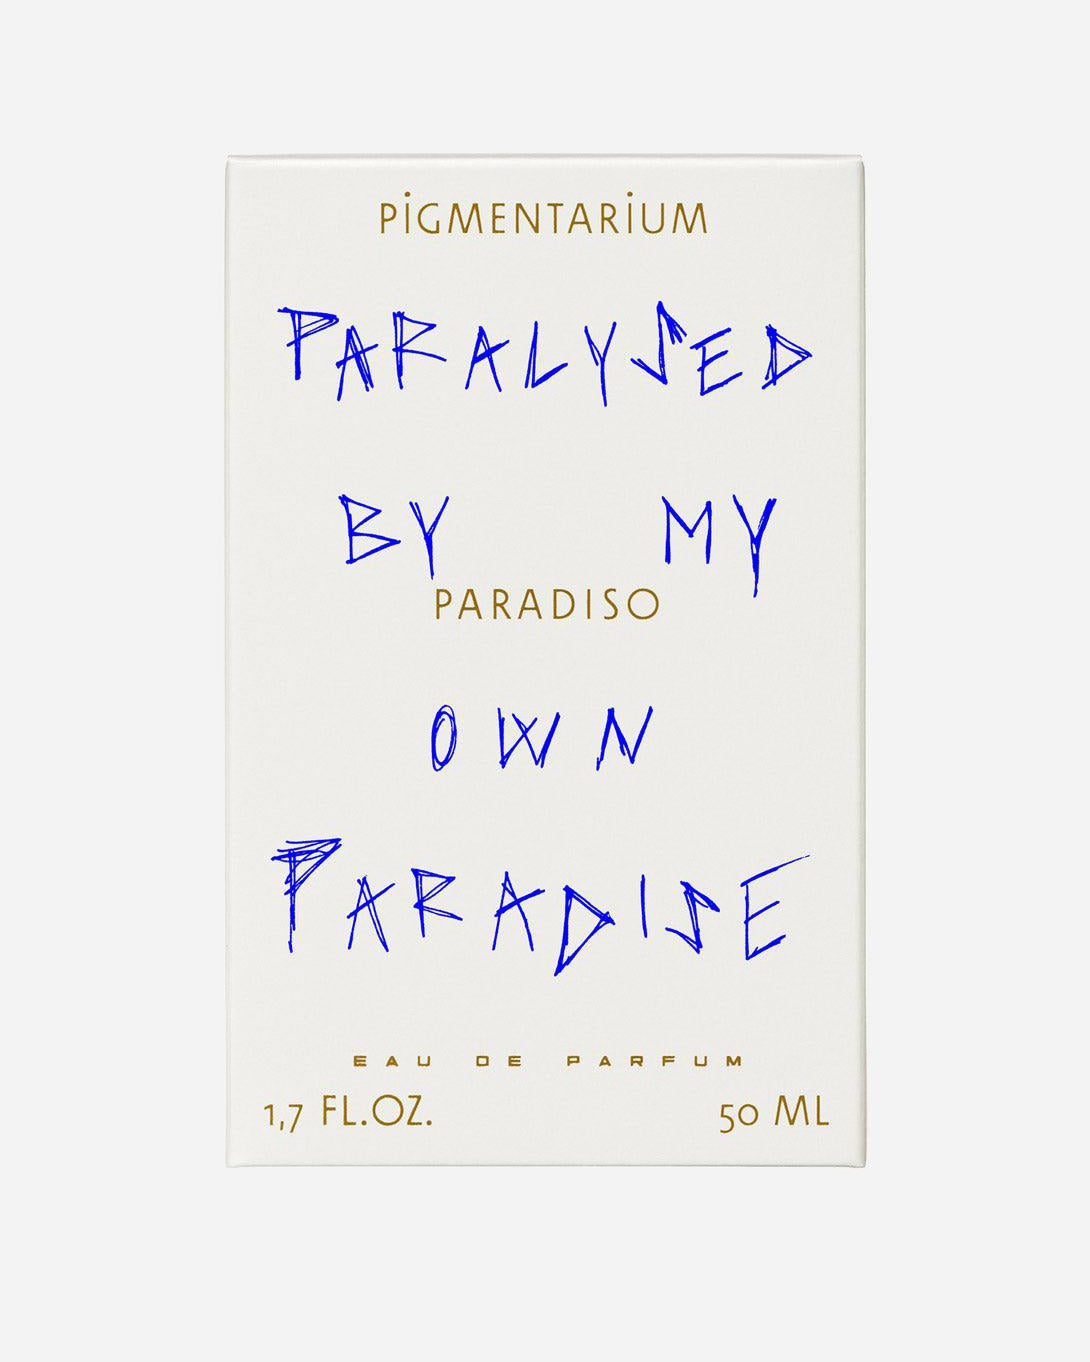 Paradiso Perfume Limited Edition - Fragrance - Pigmentarium - Elevastor